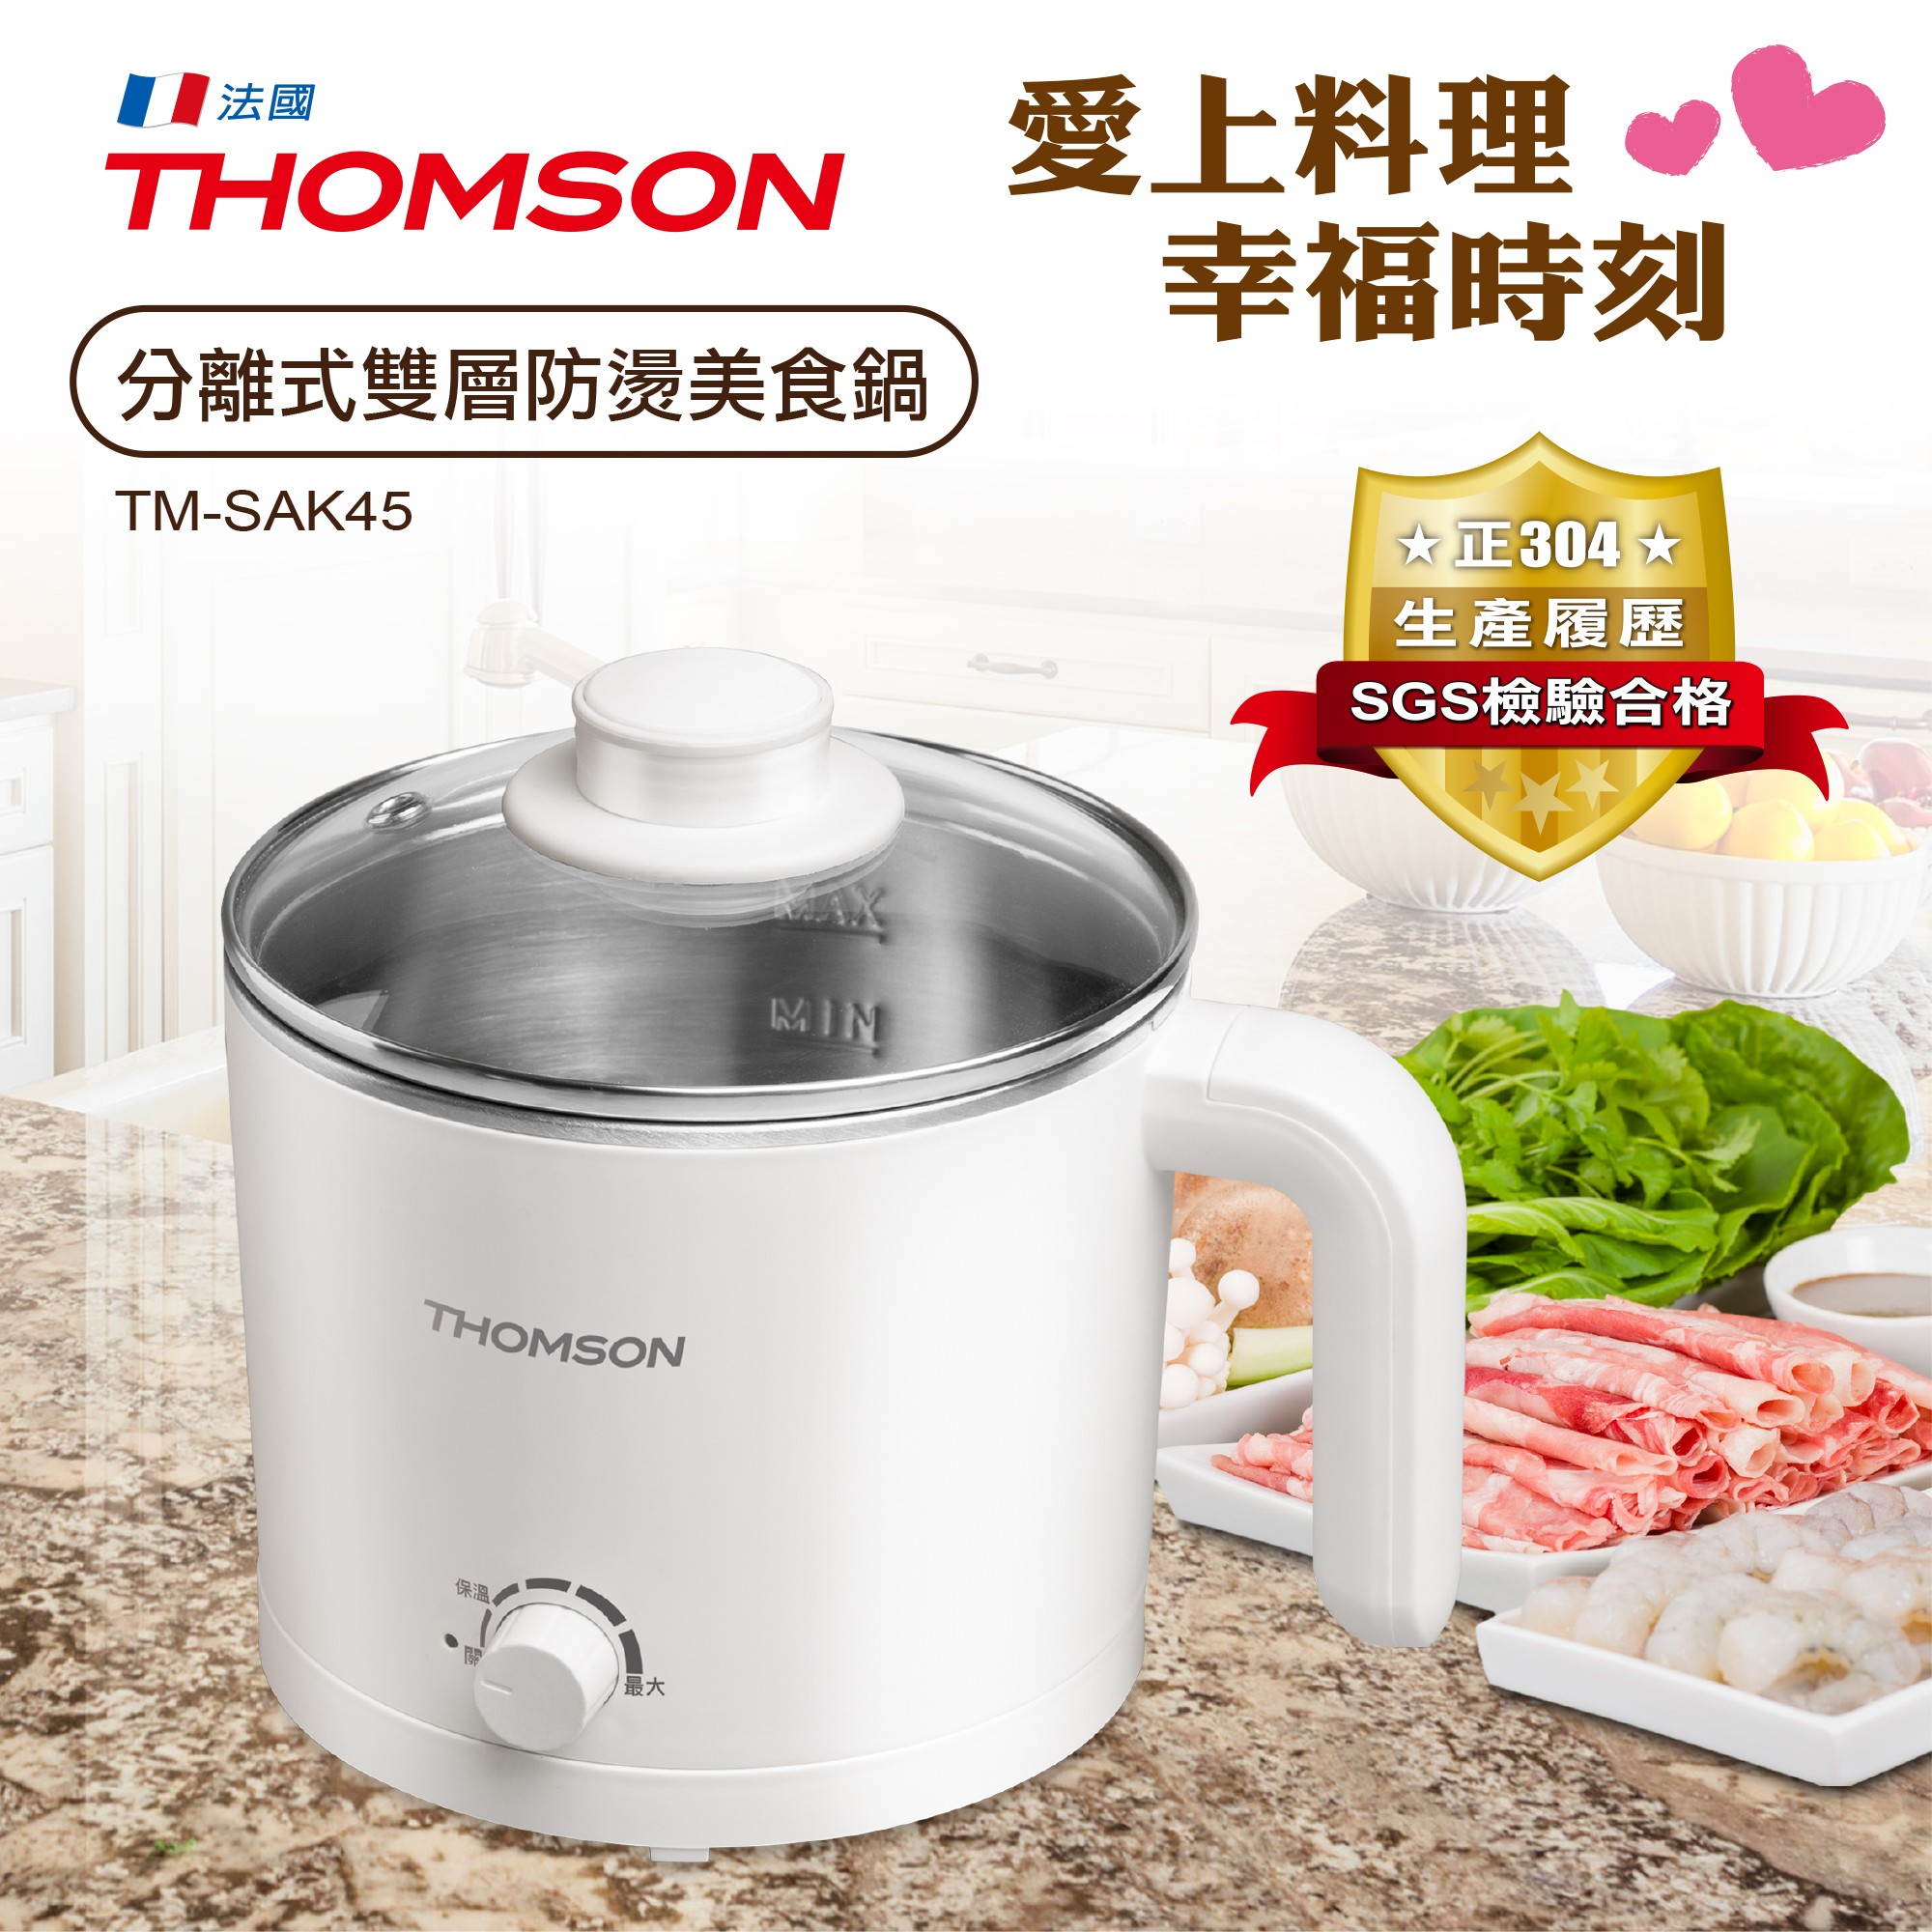 THOMSON 分離式雙層防燙美食鍋 TM-SAK45